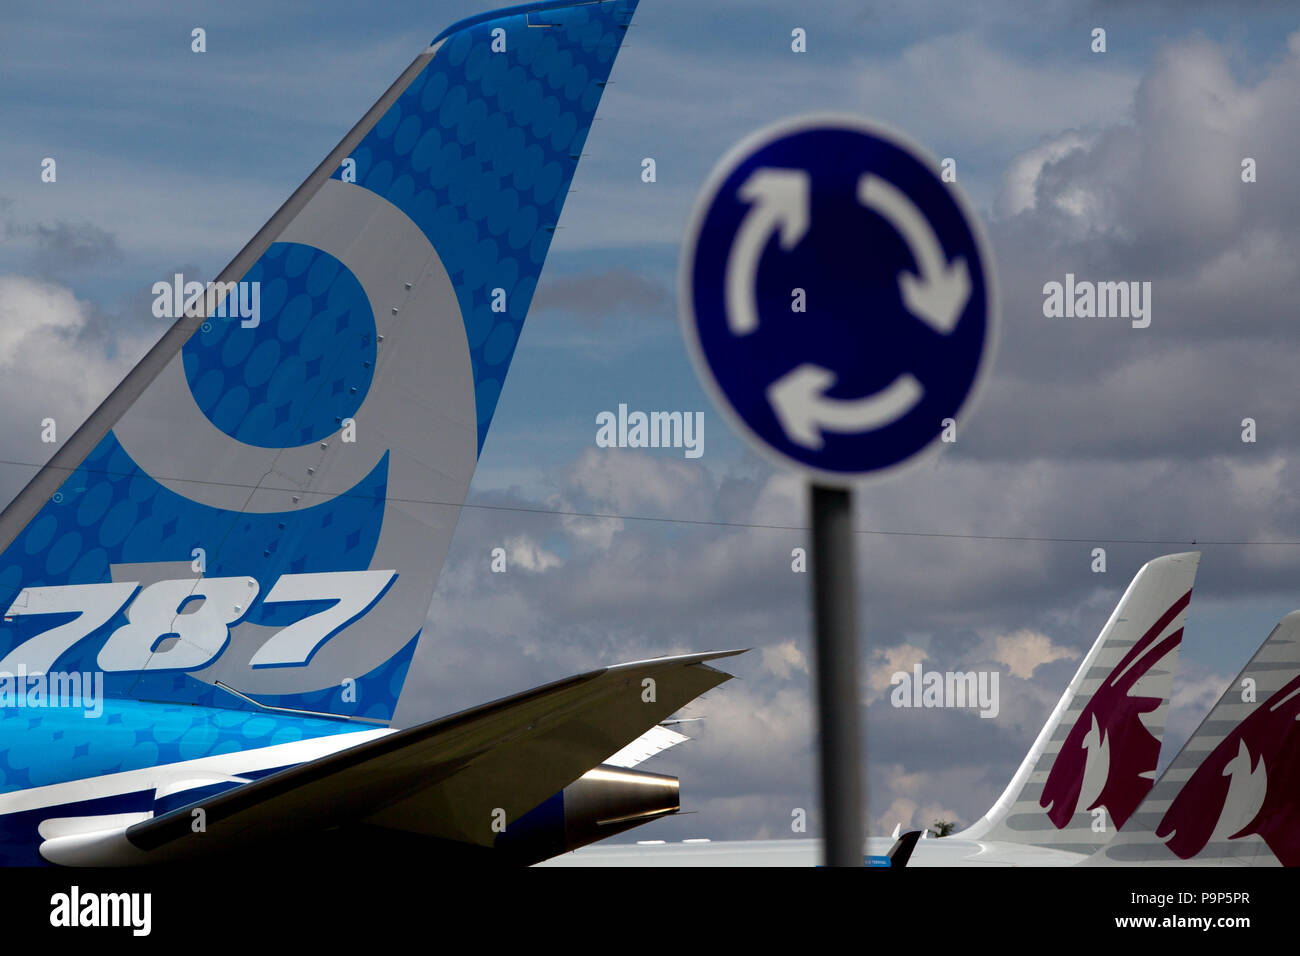 The Boeing 787-9 civil jet airplane and aircrafts of Qatar Airways at Farnborough International Airshow, UK Stock Photo